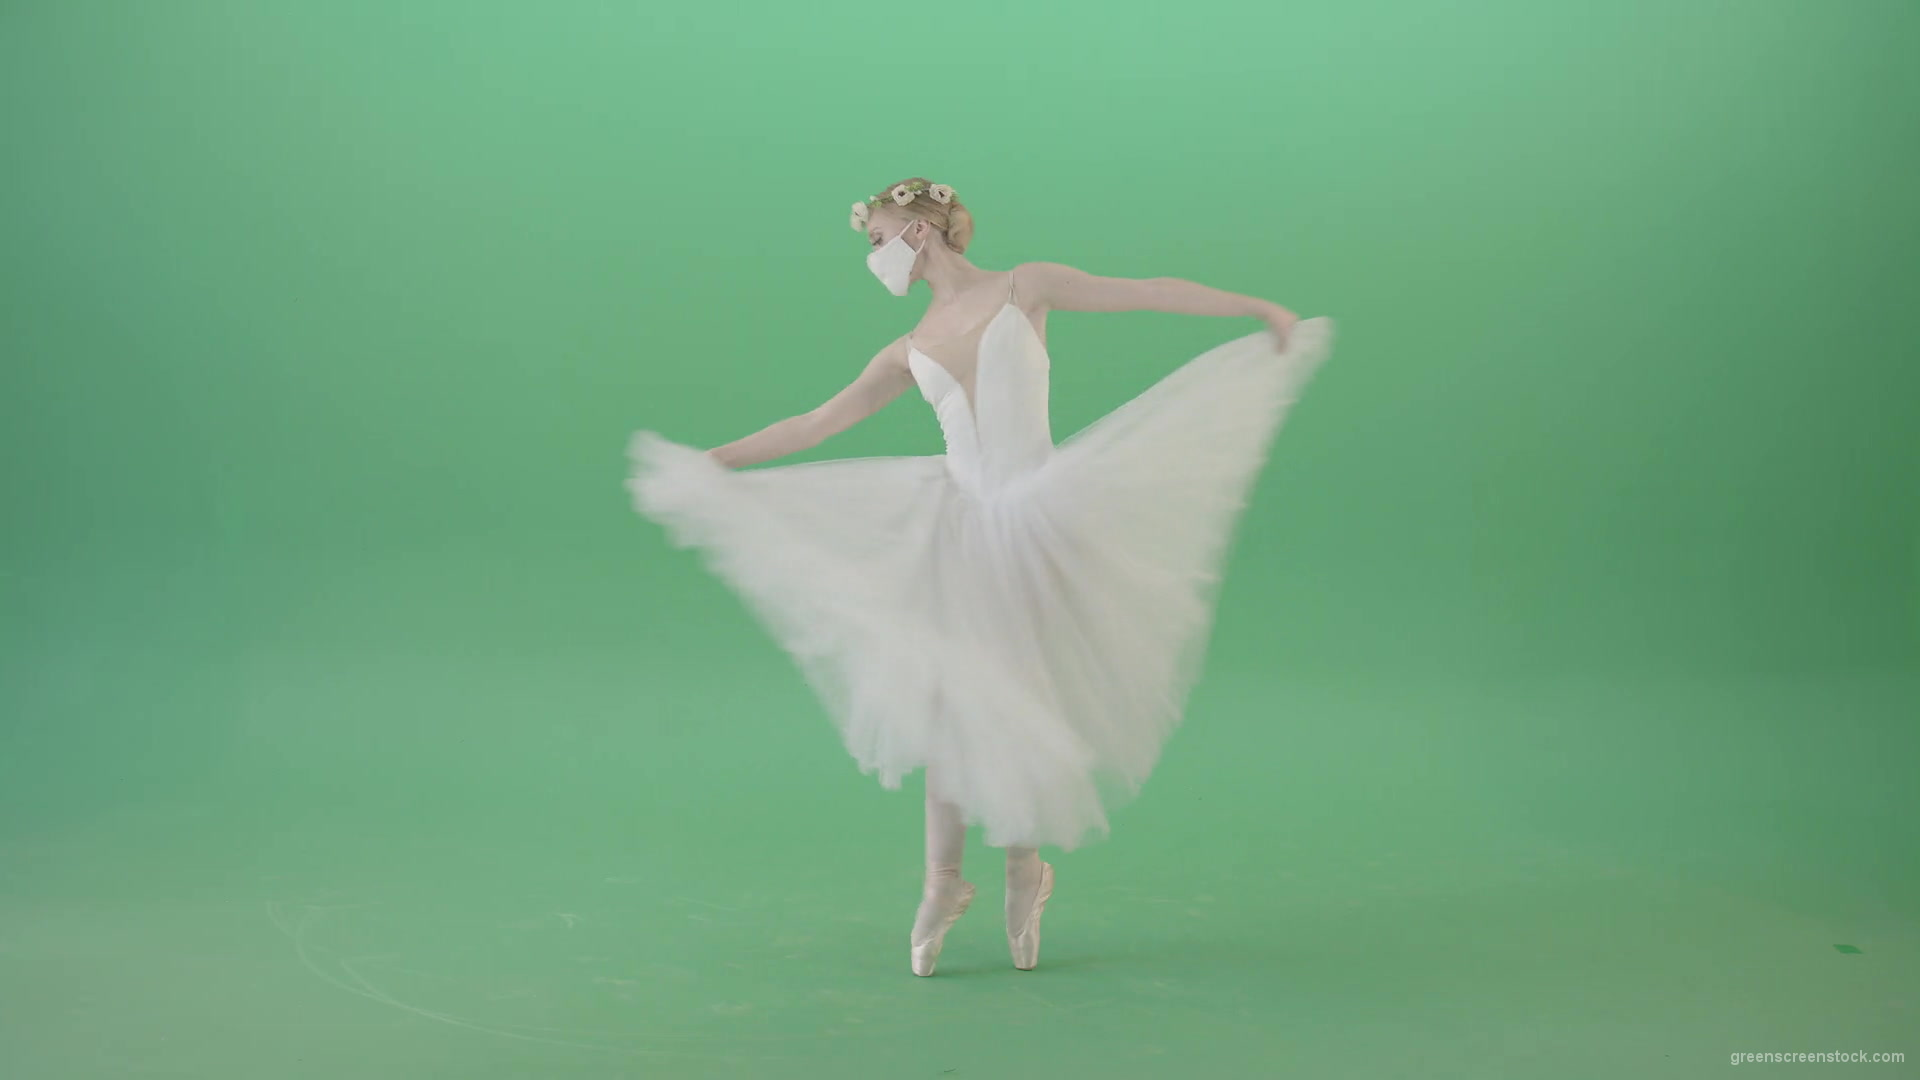 Ballet-Dancing-Girl-in-Corona-Virus-Mask-spinning-on-green-screen-4K-Video-Footage-1920_002 Green Screen Stock